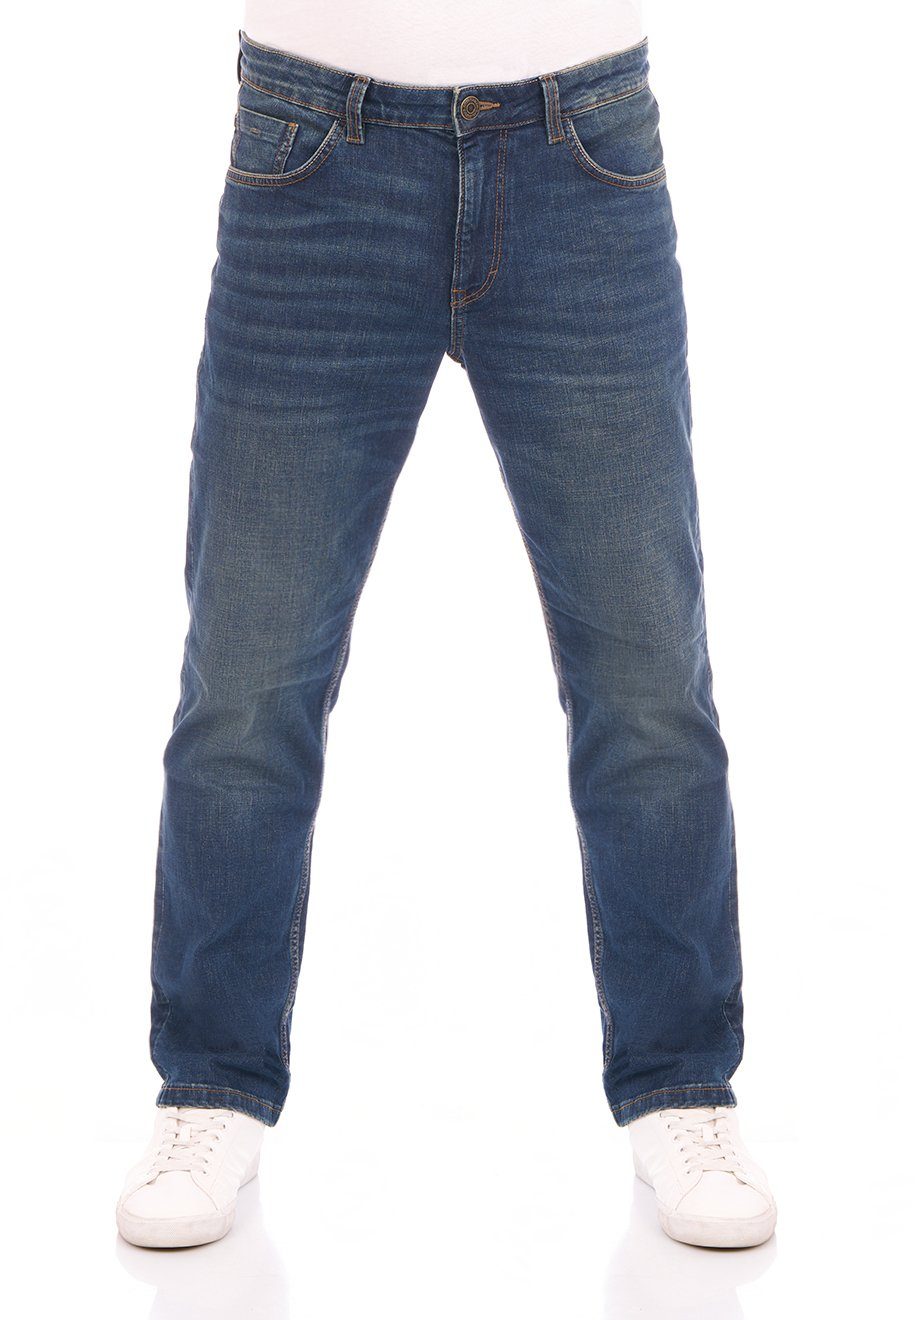 TOM TAILOR Straight-Jeans Herren Jeanshose Marvin Regular Fit Denim Hose mit Stretch Stone Blue Denim Tint (10147)